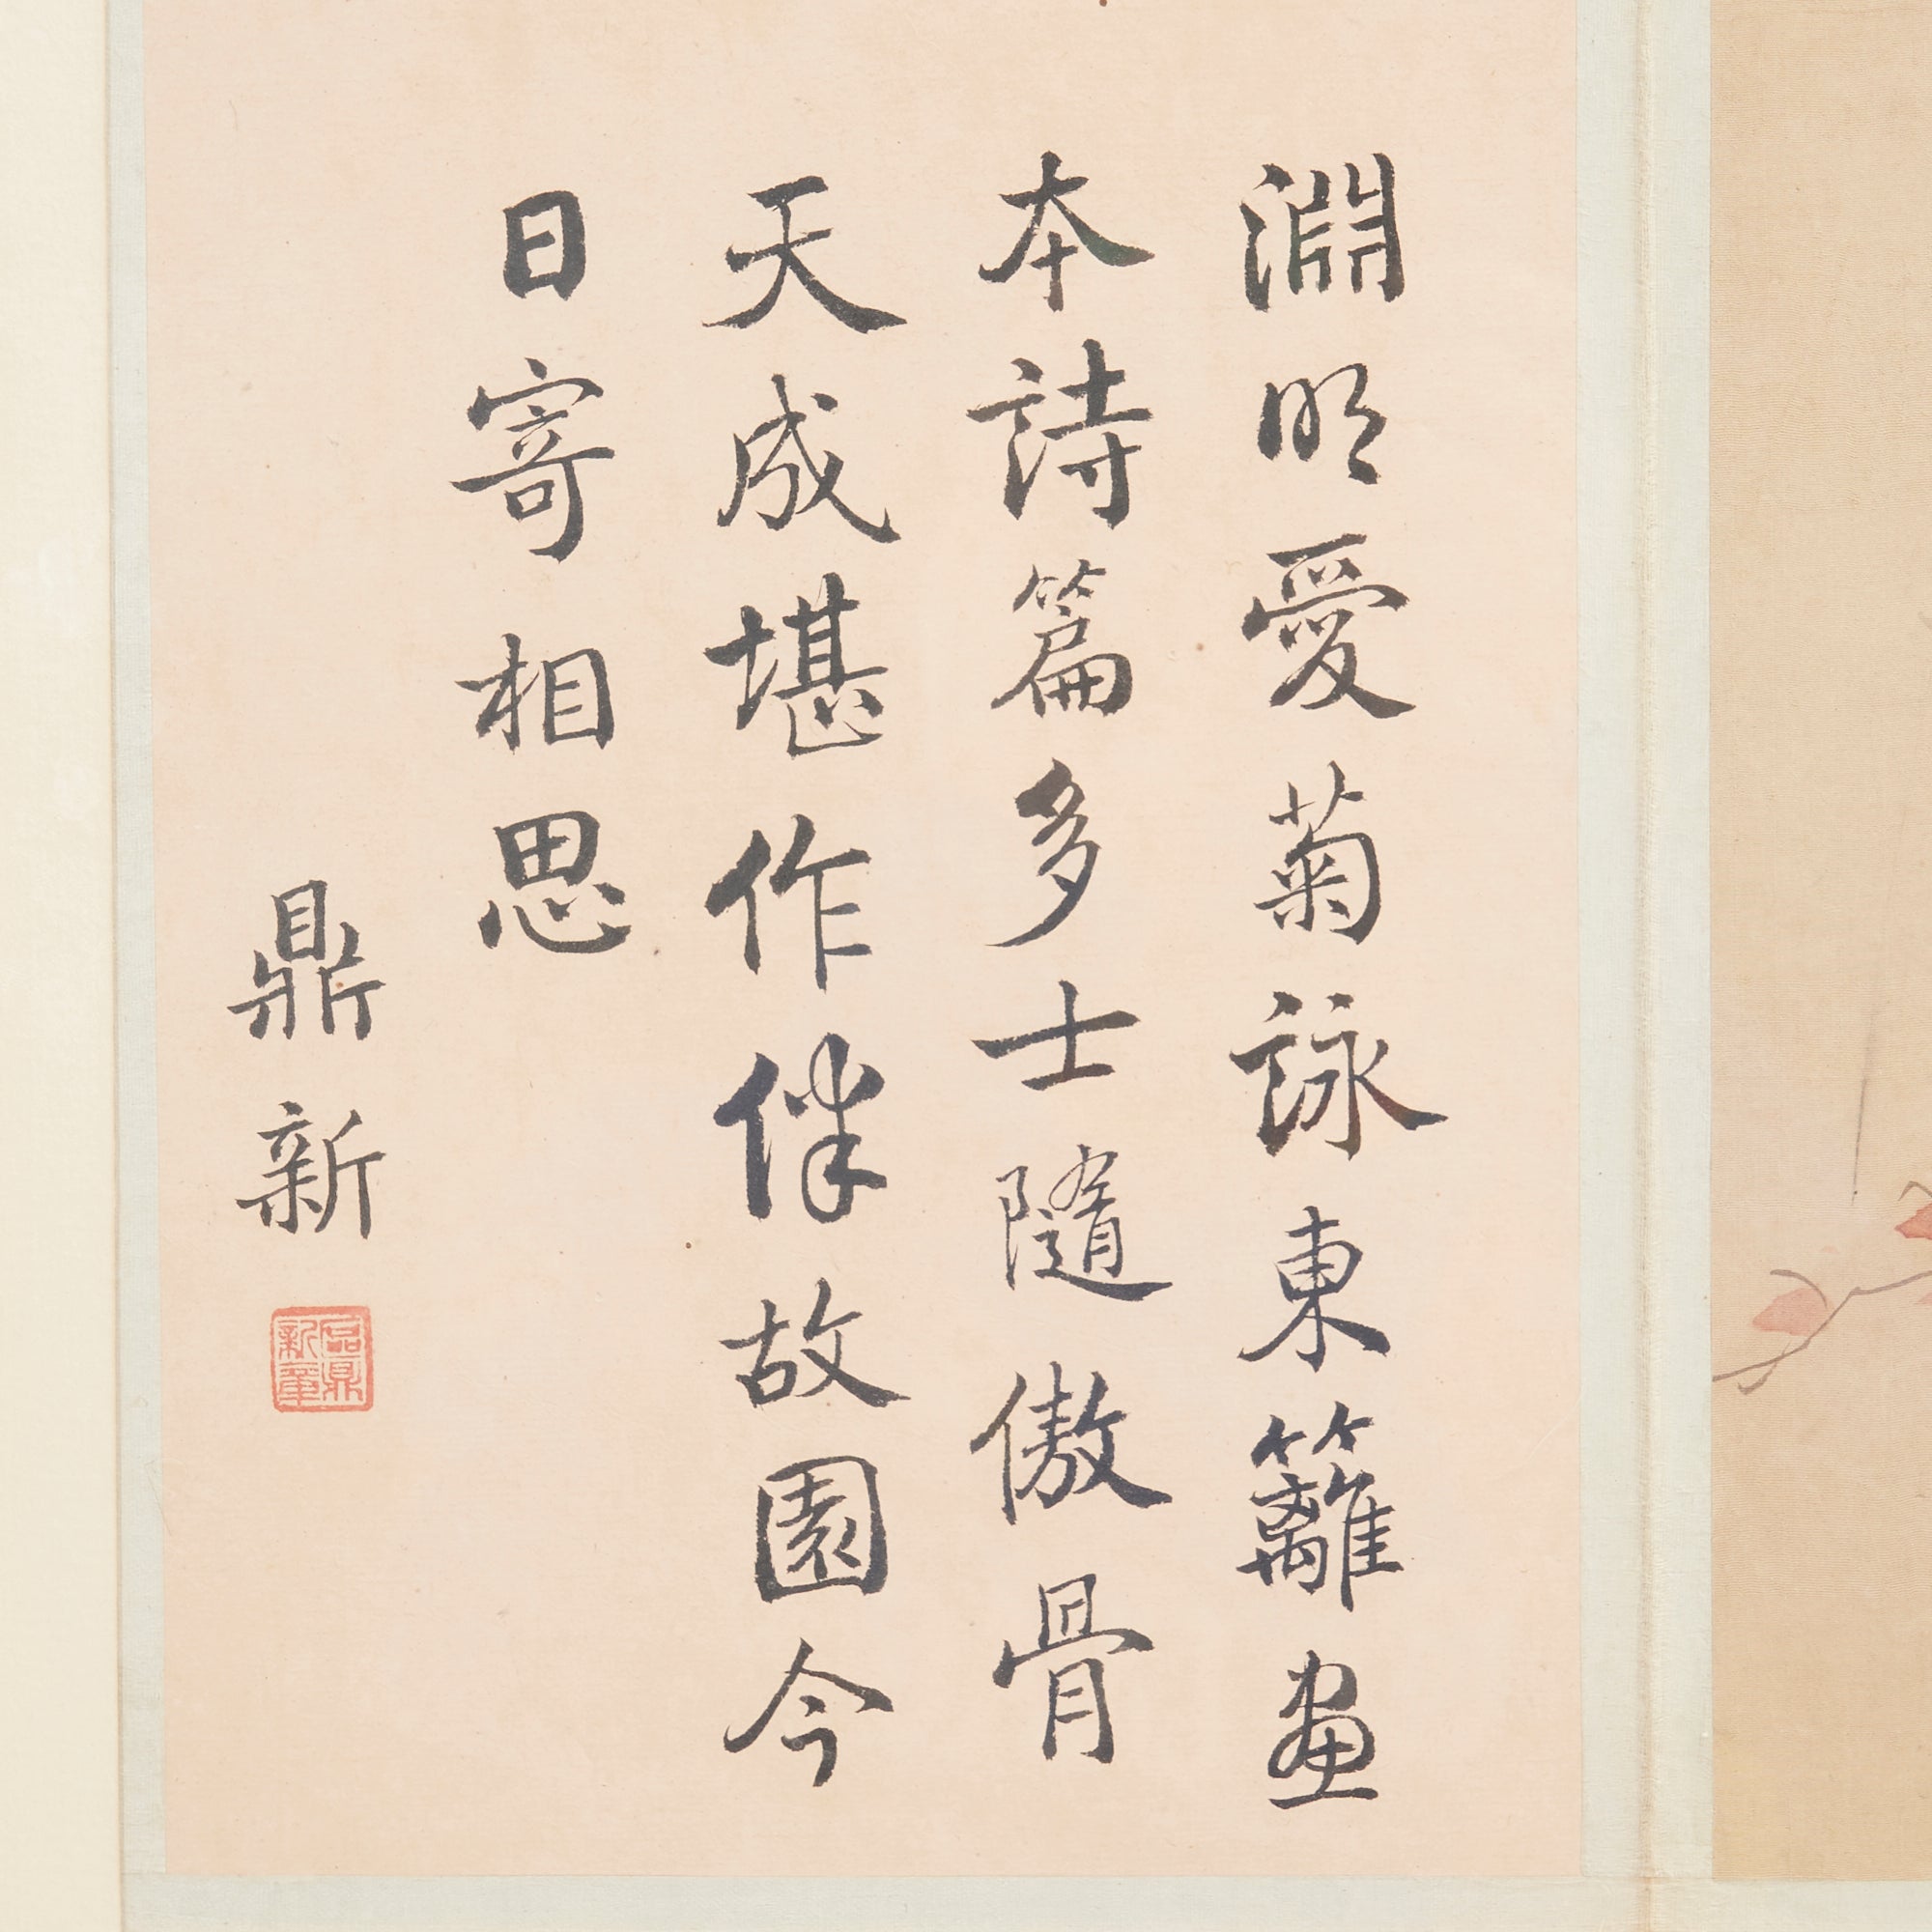 Asian Watercolour on Silk / Calligraphy